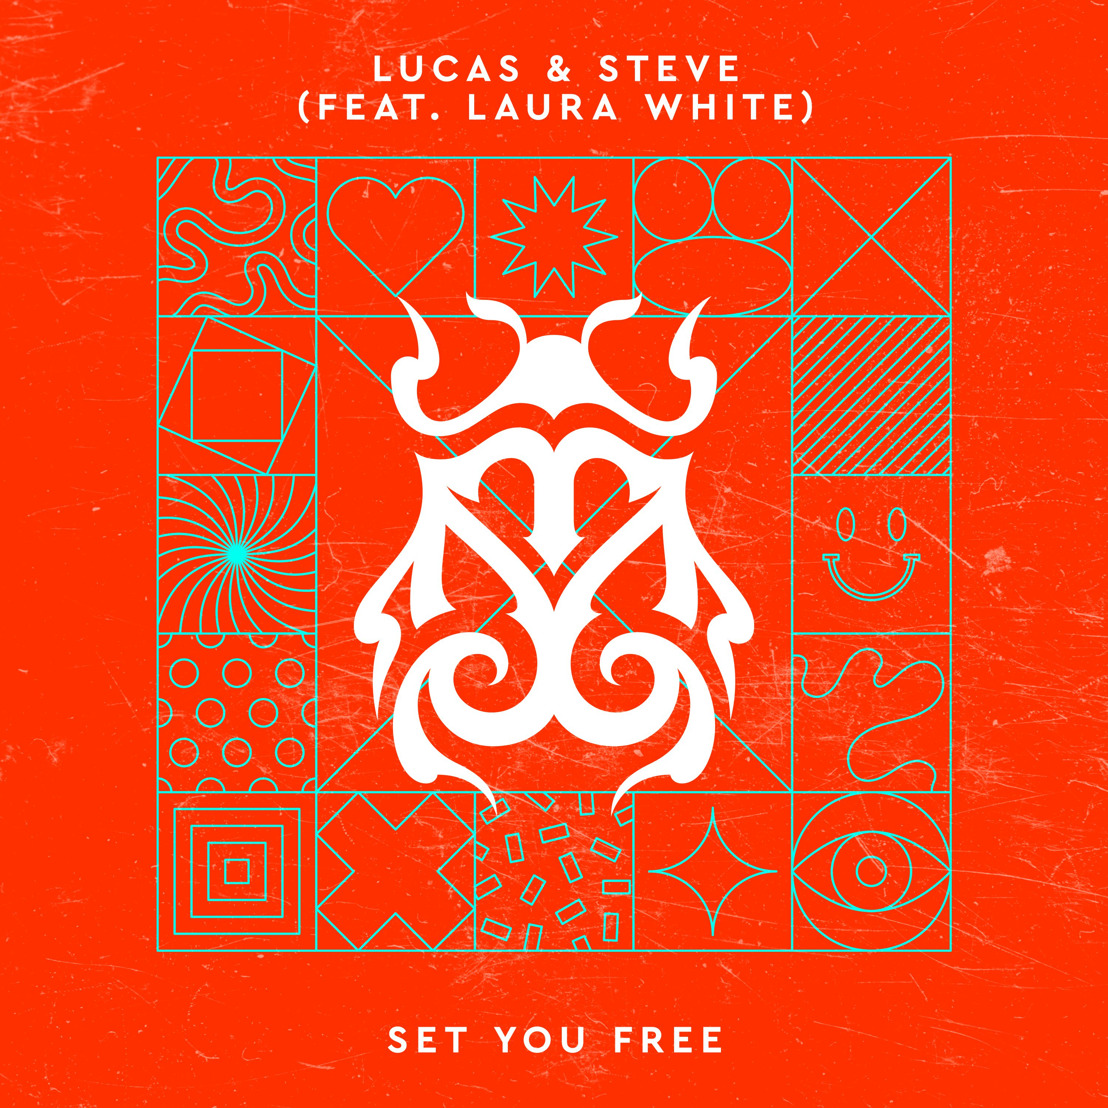 Dutch duo Lucas & Steve deliver a straight dancefloor banger ‘Set You Free’